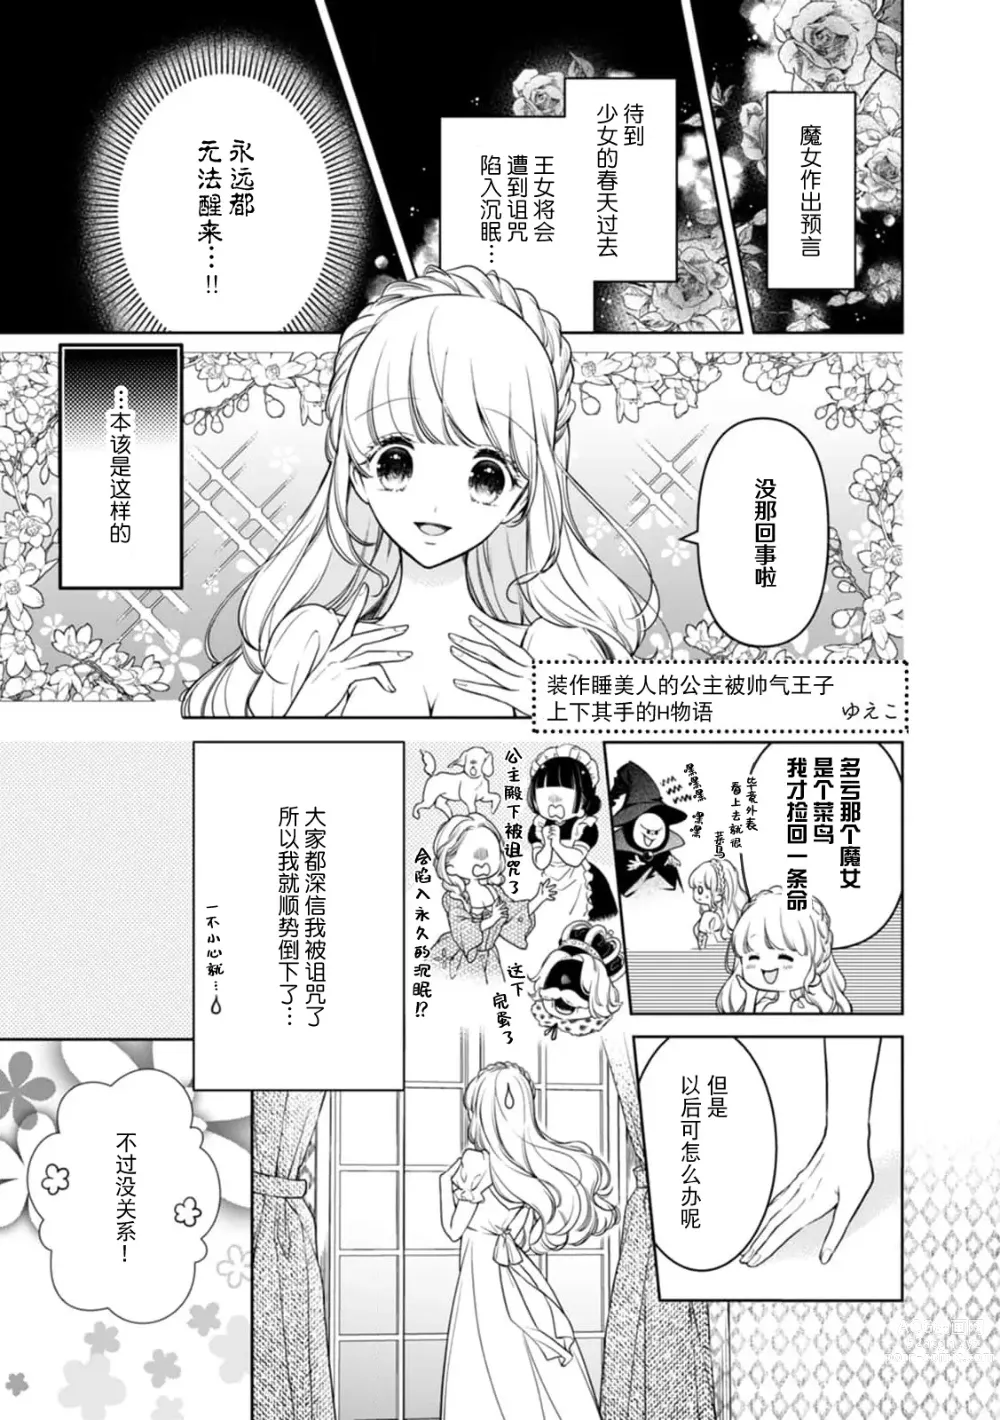 Page 2 of manga 装作睡美人的公主被帅气王子 上下其手的H物语